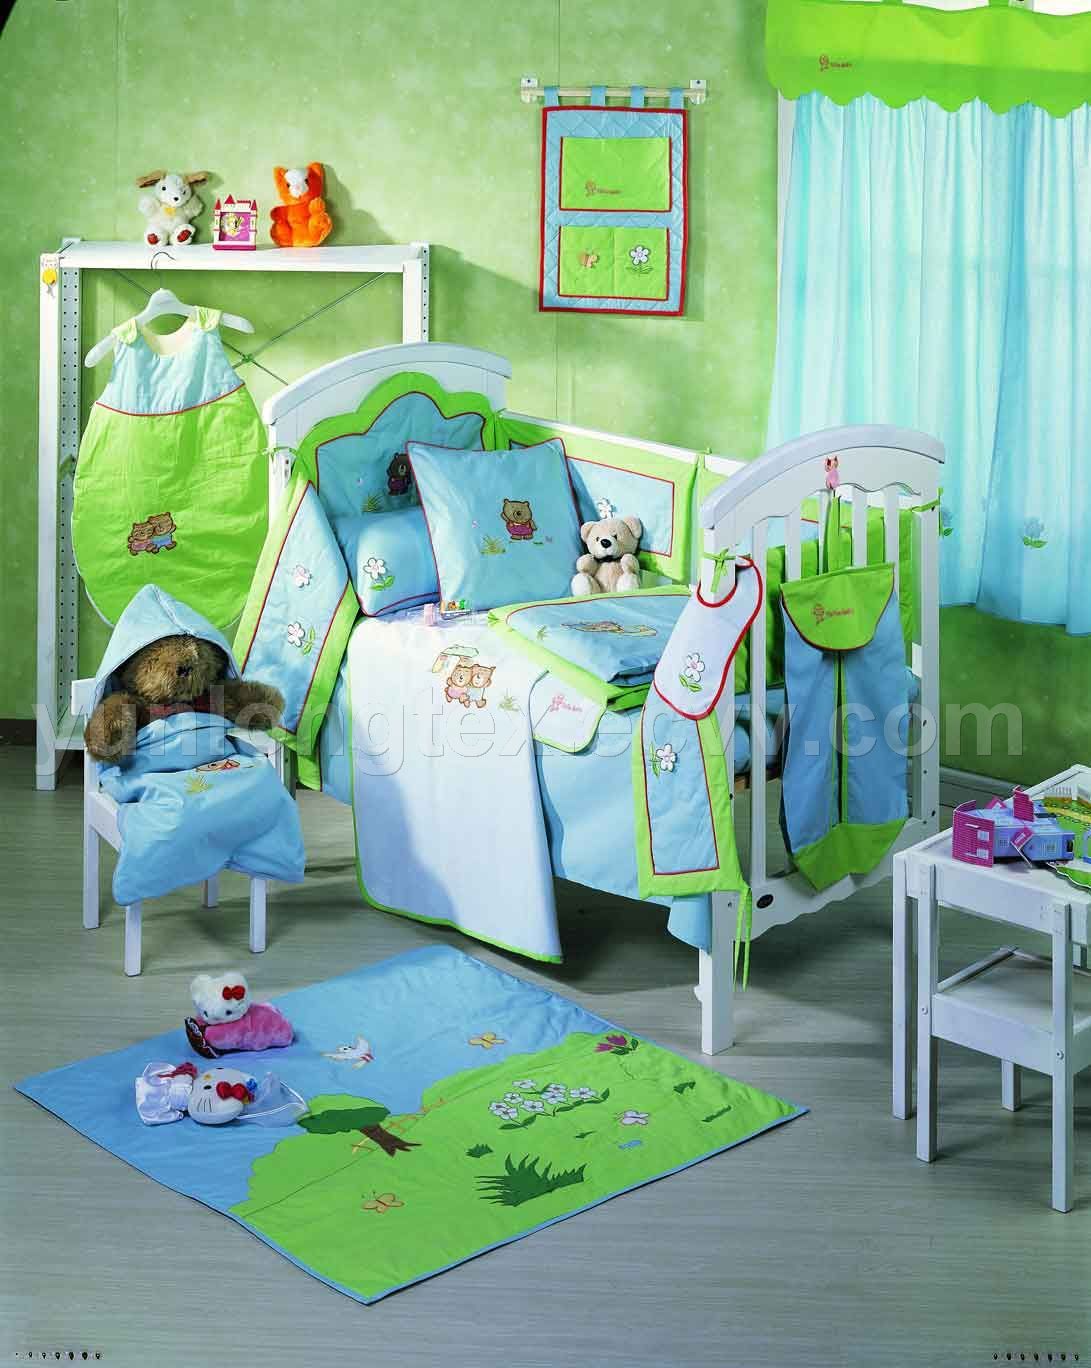 Baby doll stroller bed set